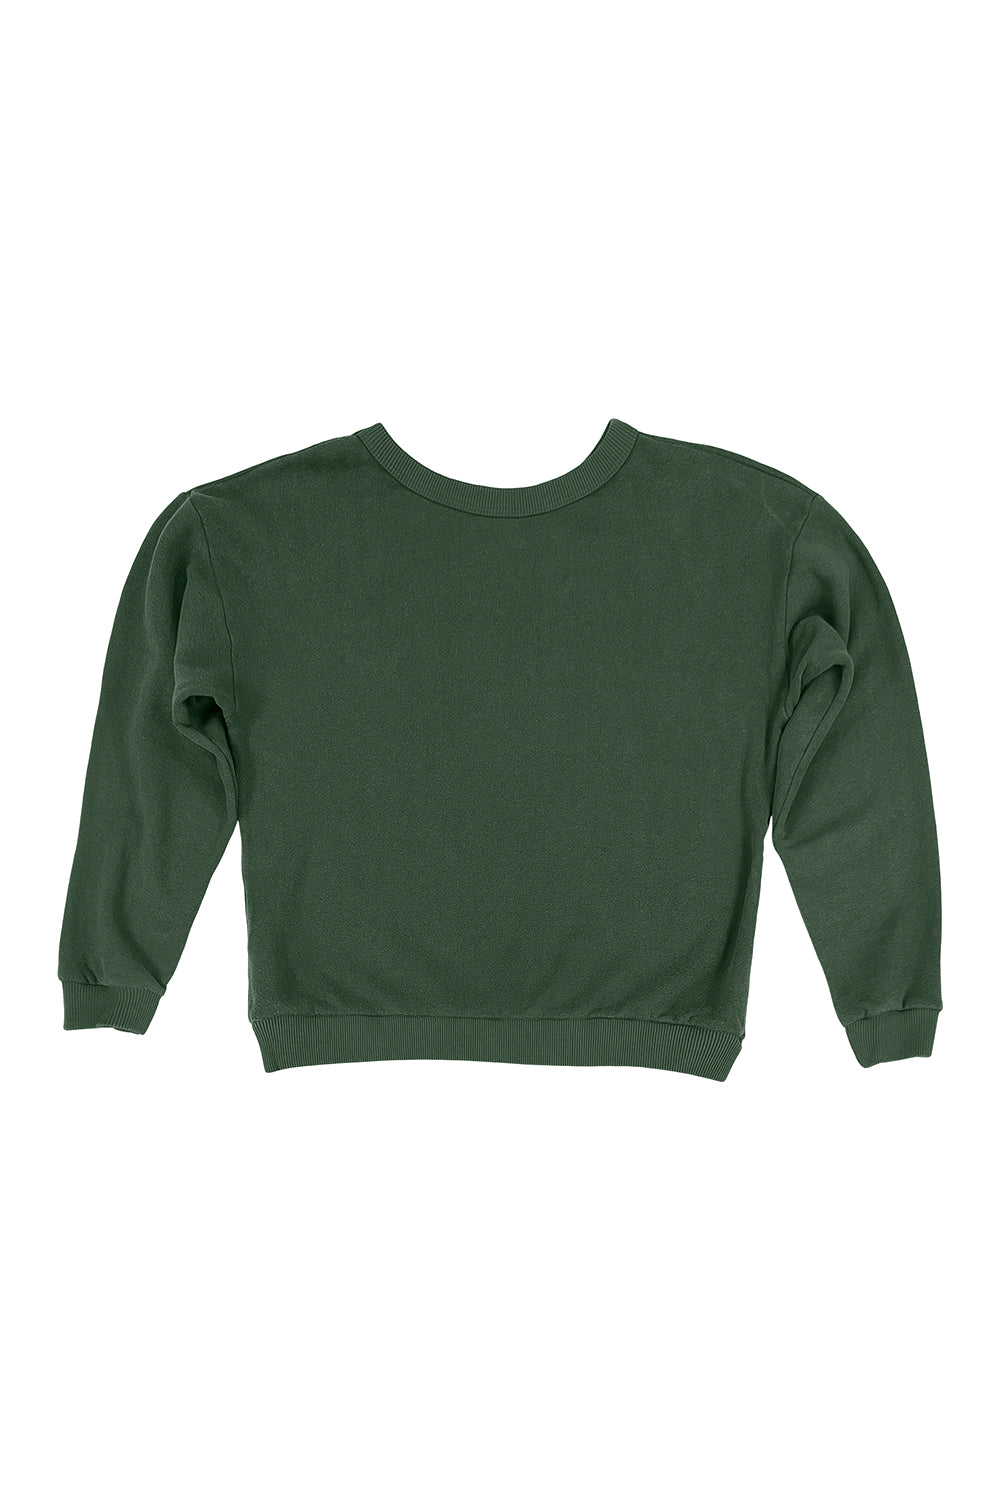 Crux Cropped Sweatshirt | Jungmaven Hemp Clothing & Accessories / Color: Hunter Green